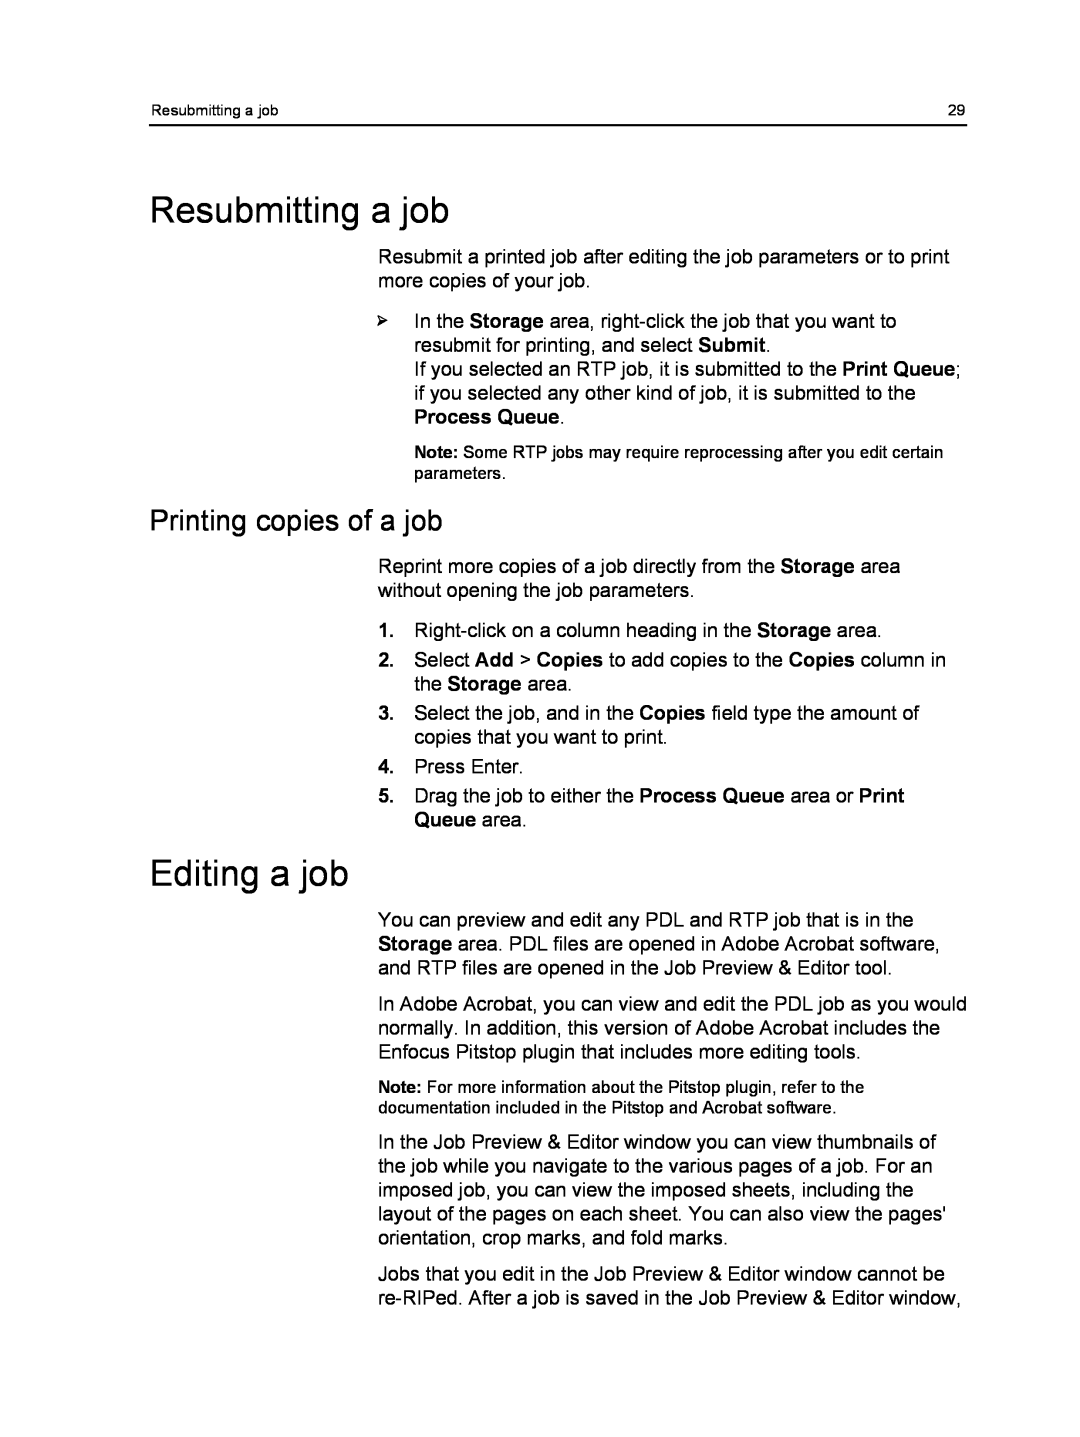 Xerox 550, 560 manual Resubmitting a job, Editing a job, Printing copies of a job 